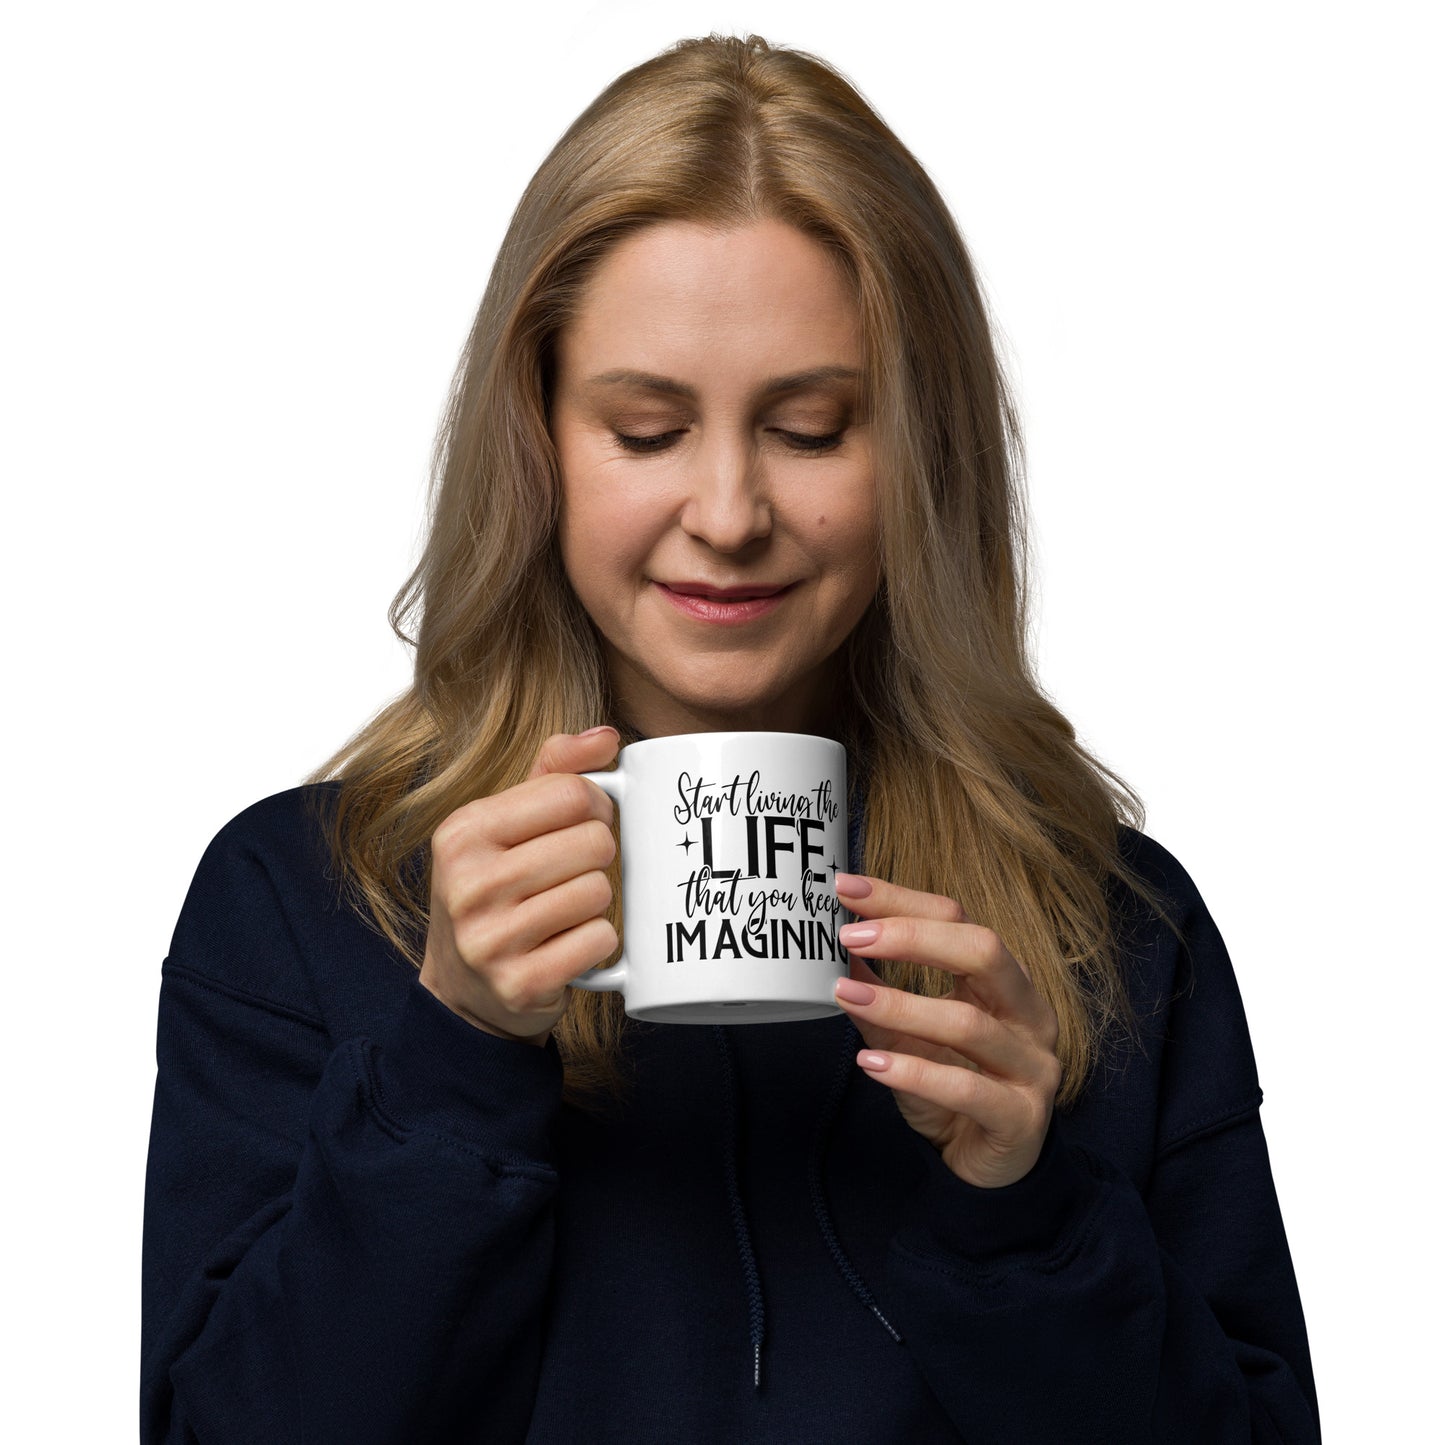 Start Living the Life you Keep Imagining Mug